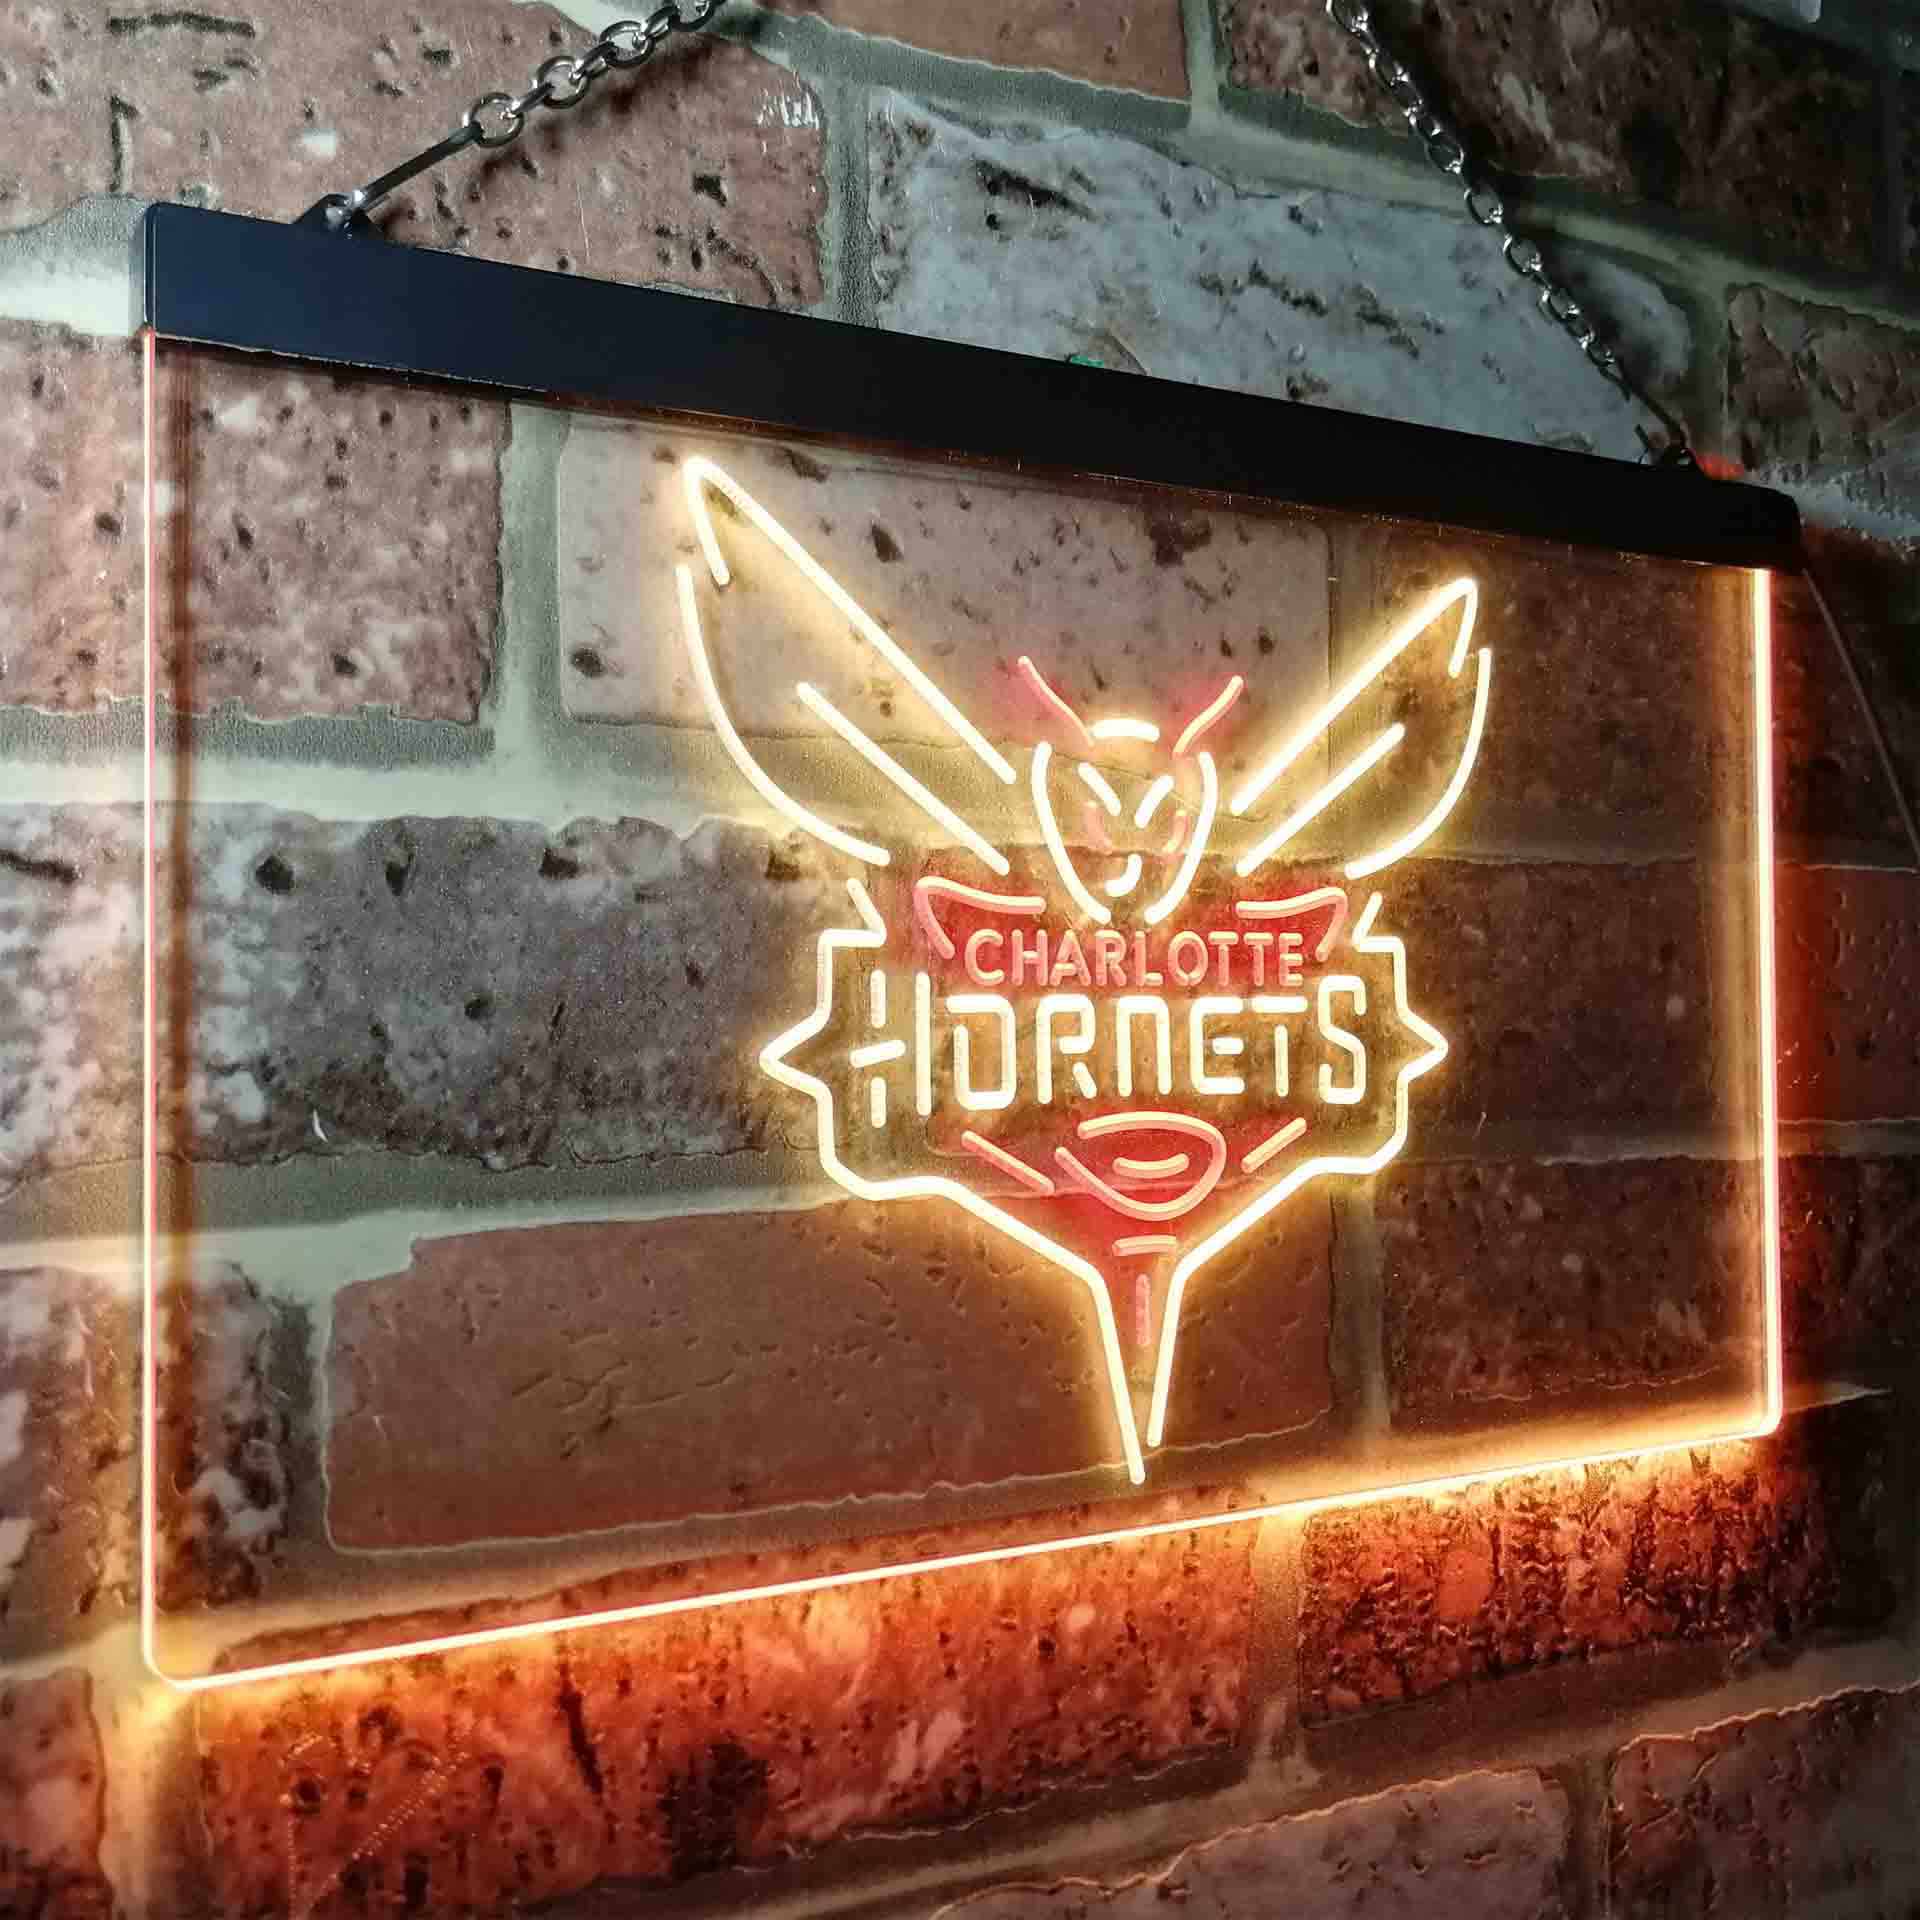 Charlotte League Hornets Club Basketball Souvenir LED Neon Sign